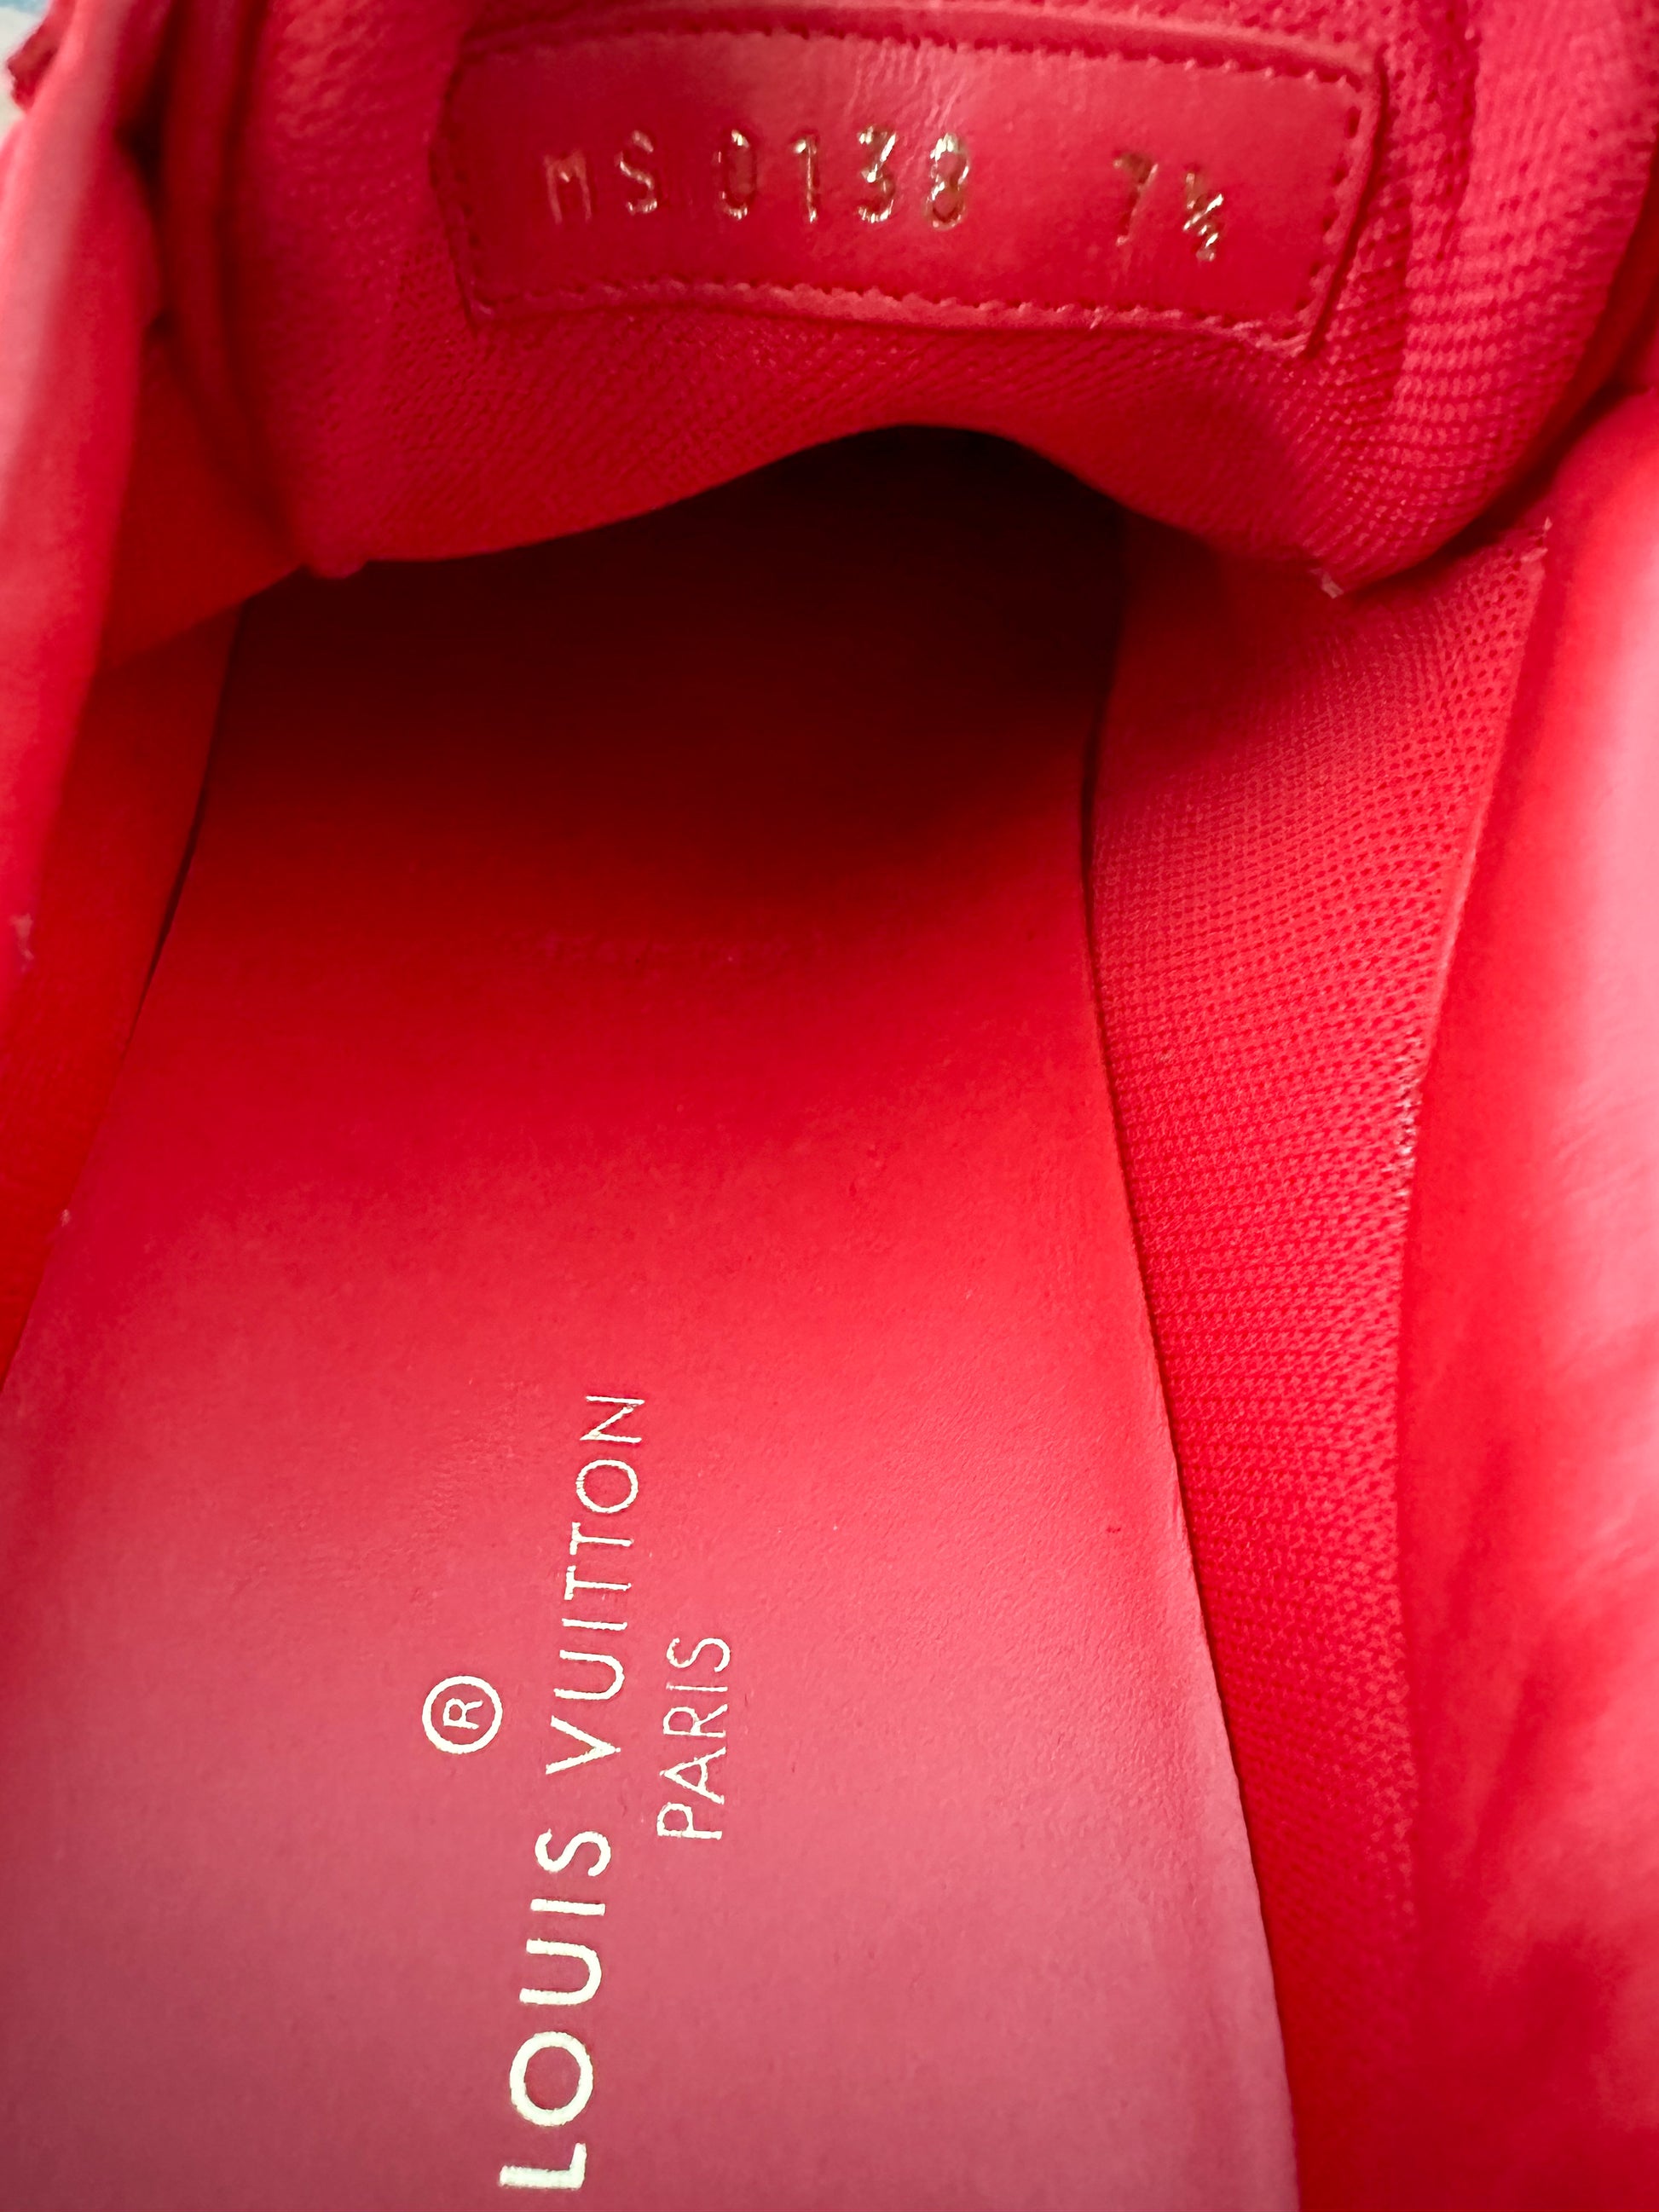 Louis Vuitton to Auction Louis Vuitton I (RED) LV Trainer